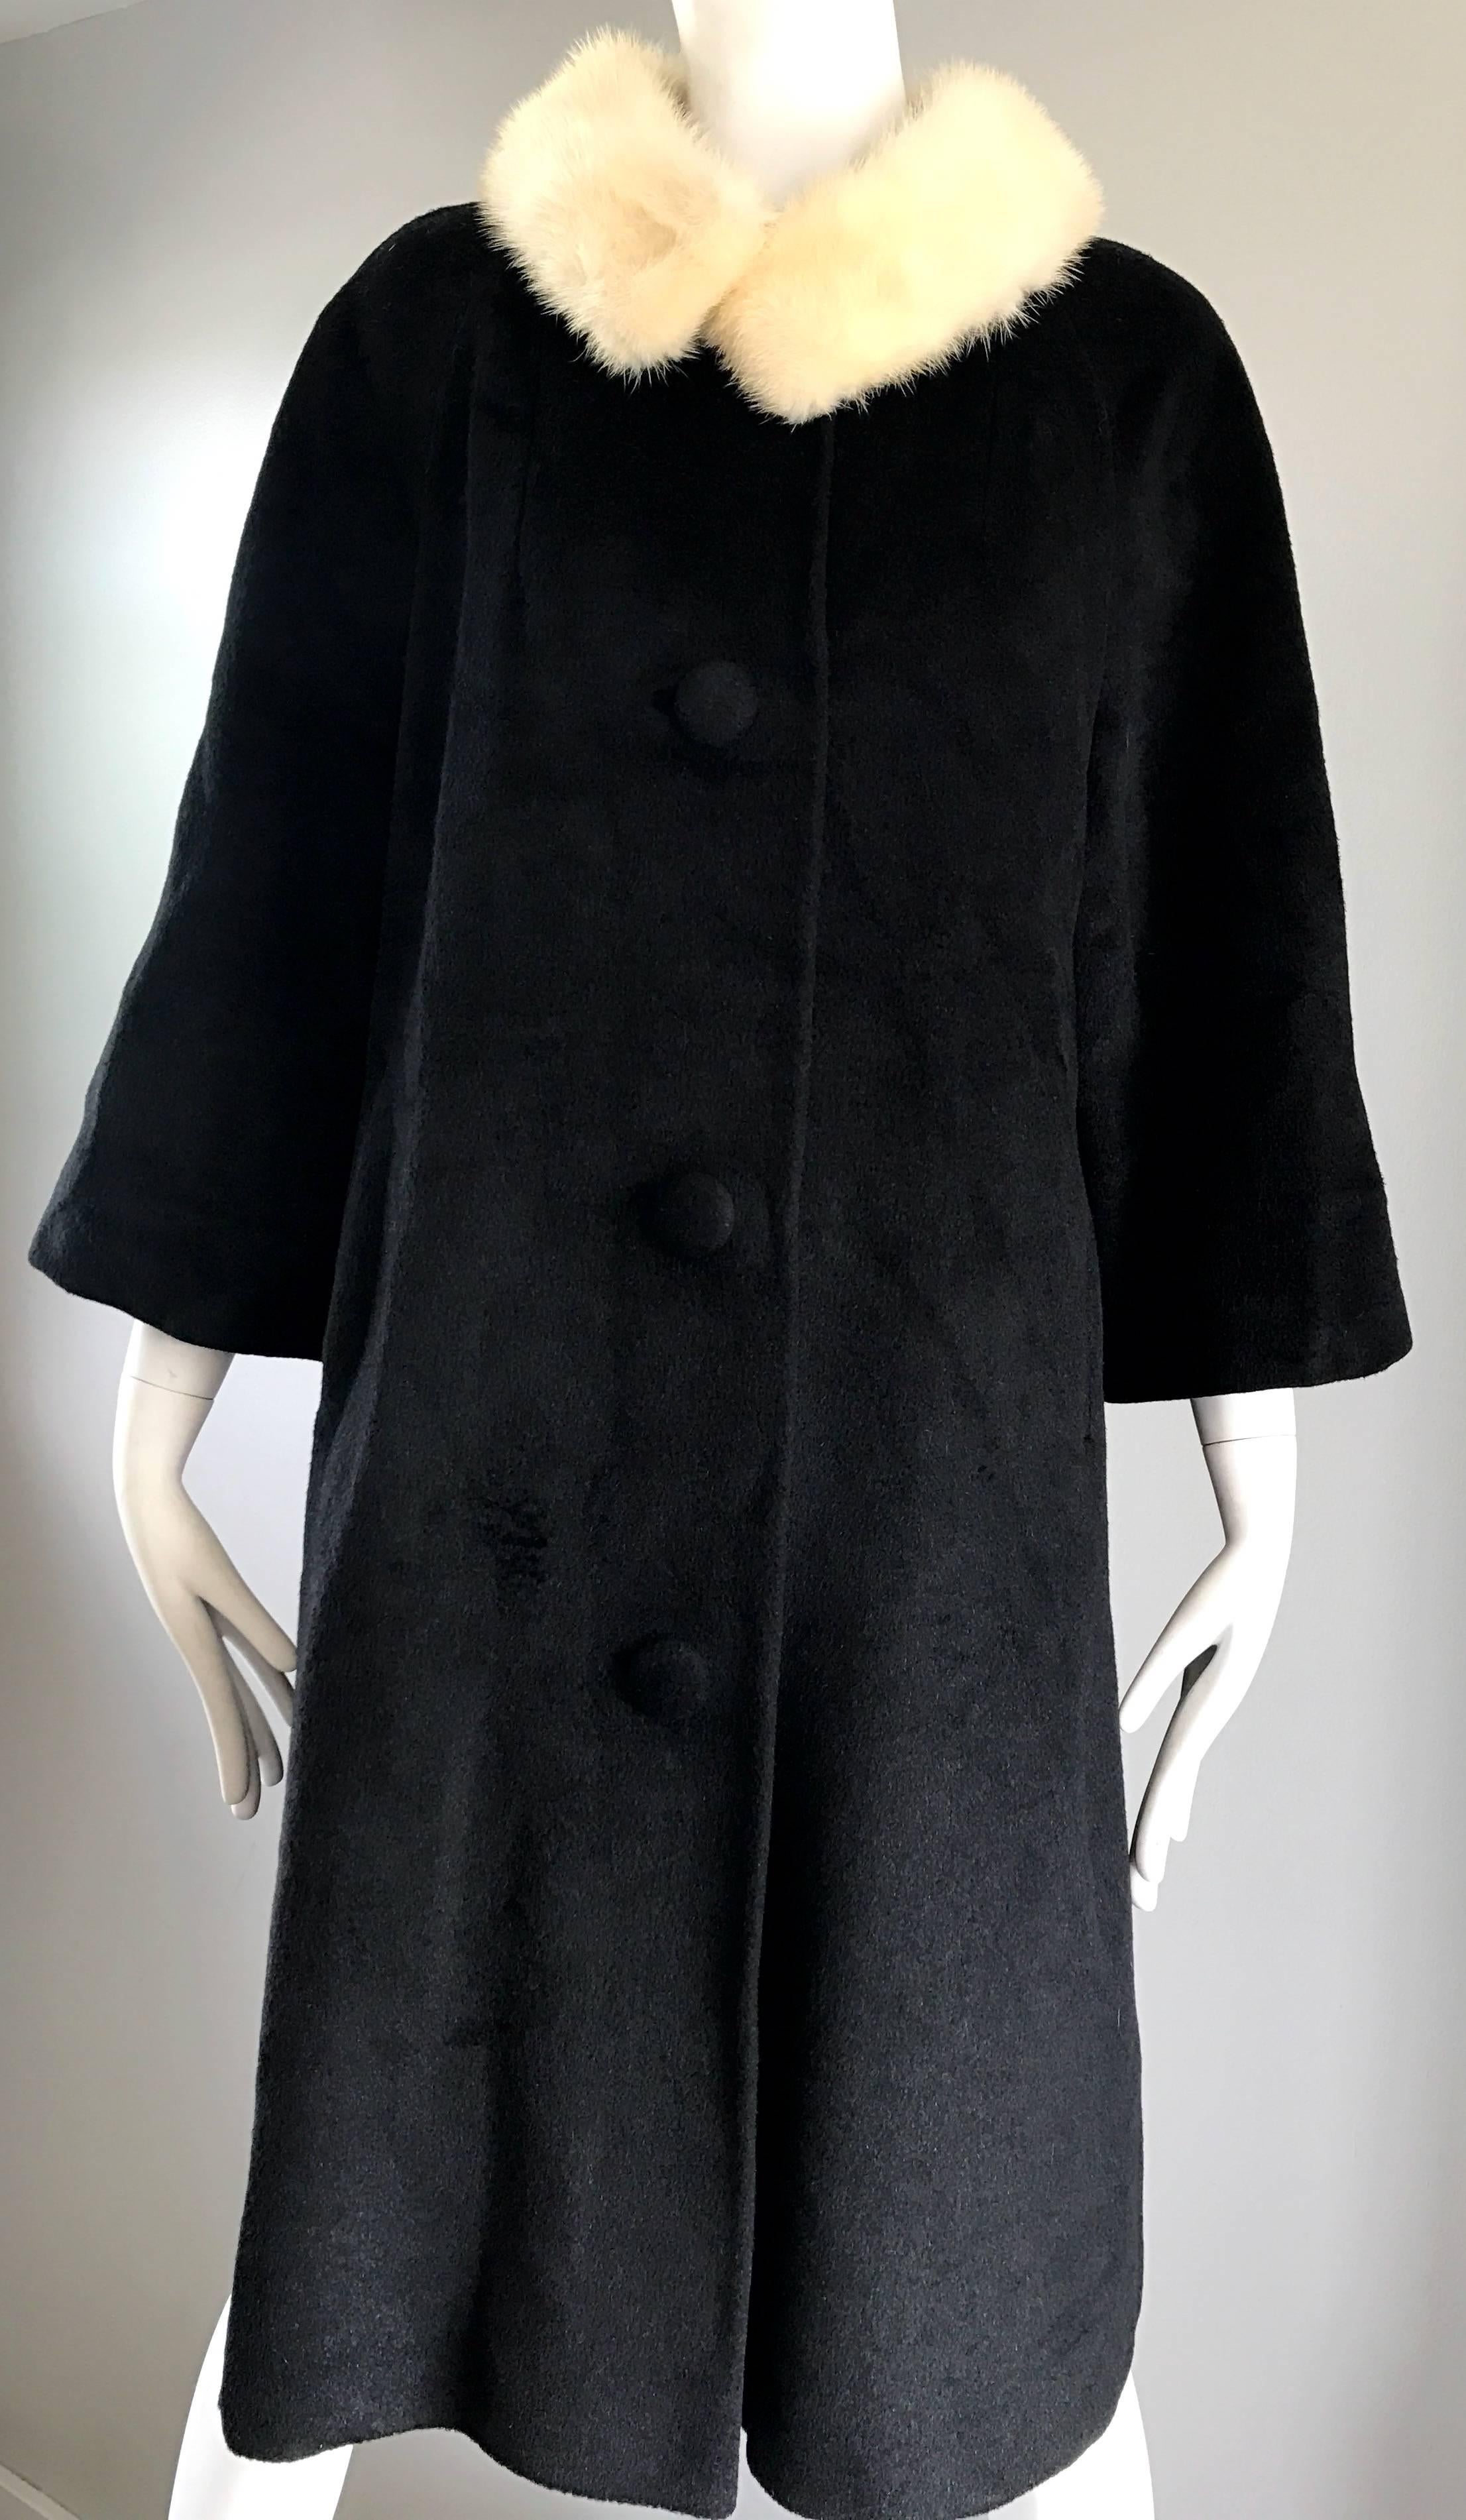 Lilli Ann 1960s Black and White Wool + Mink Fur Vintage 60s Swing Jacket Coat  For Sale 2